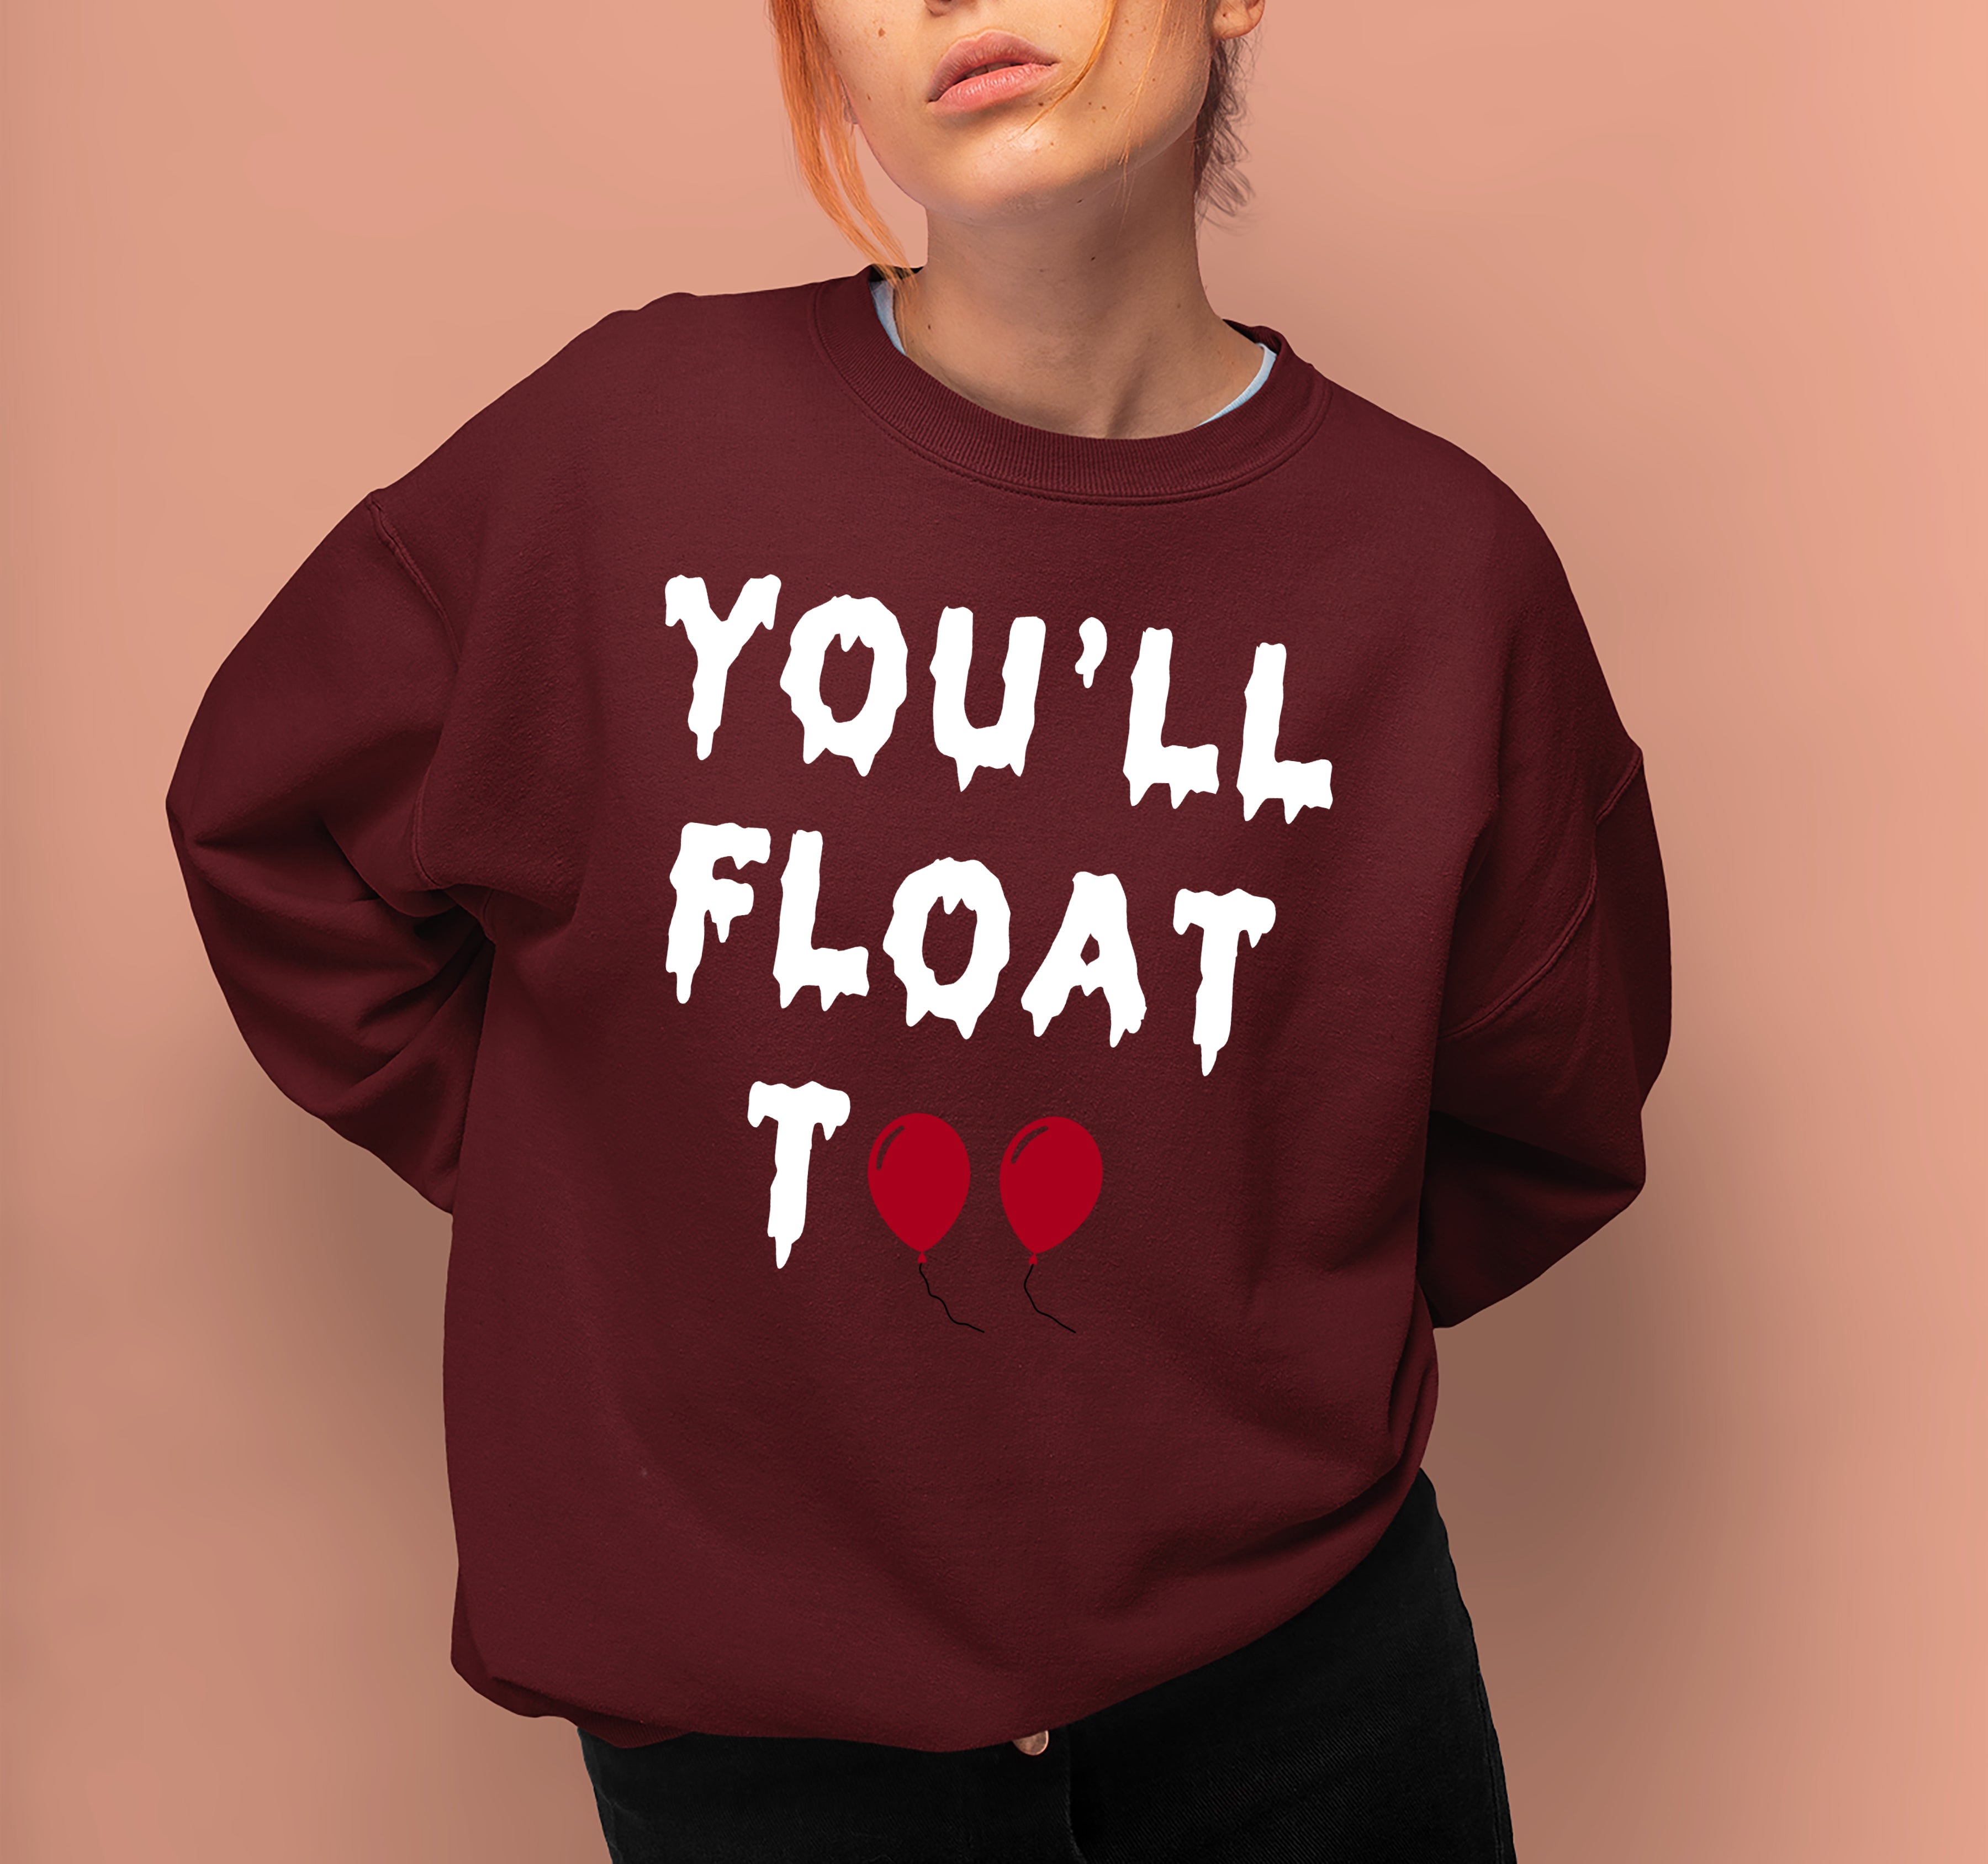 You Will Float Too Sweatshirt